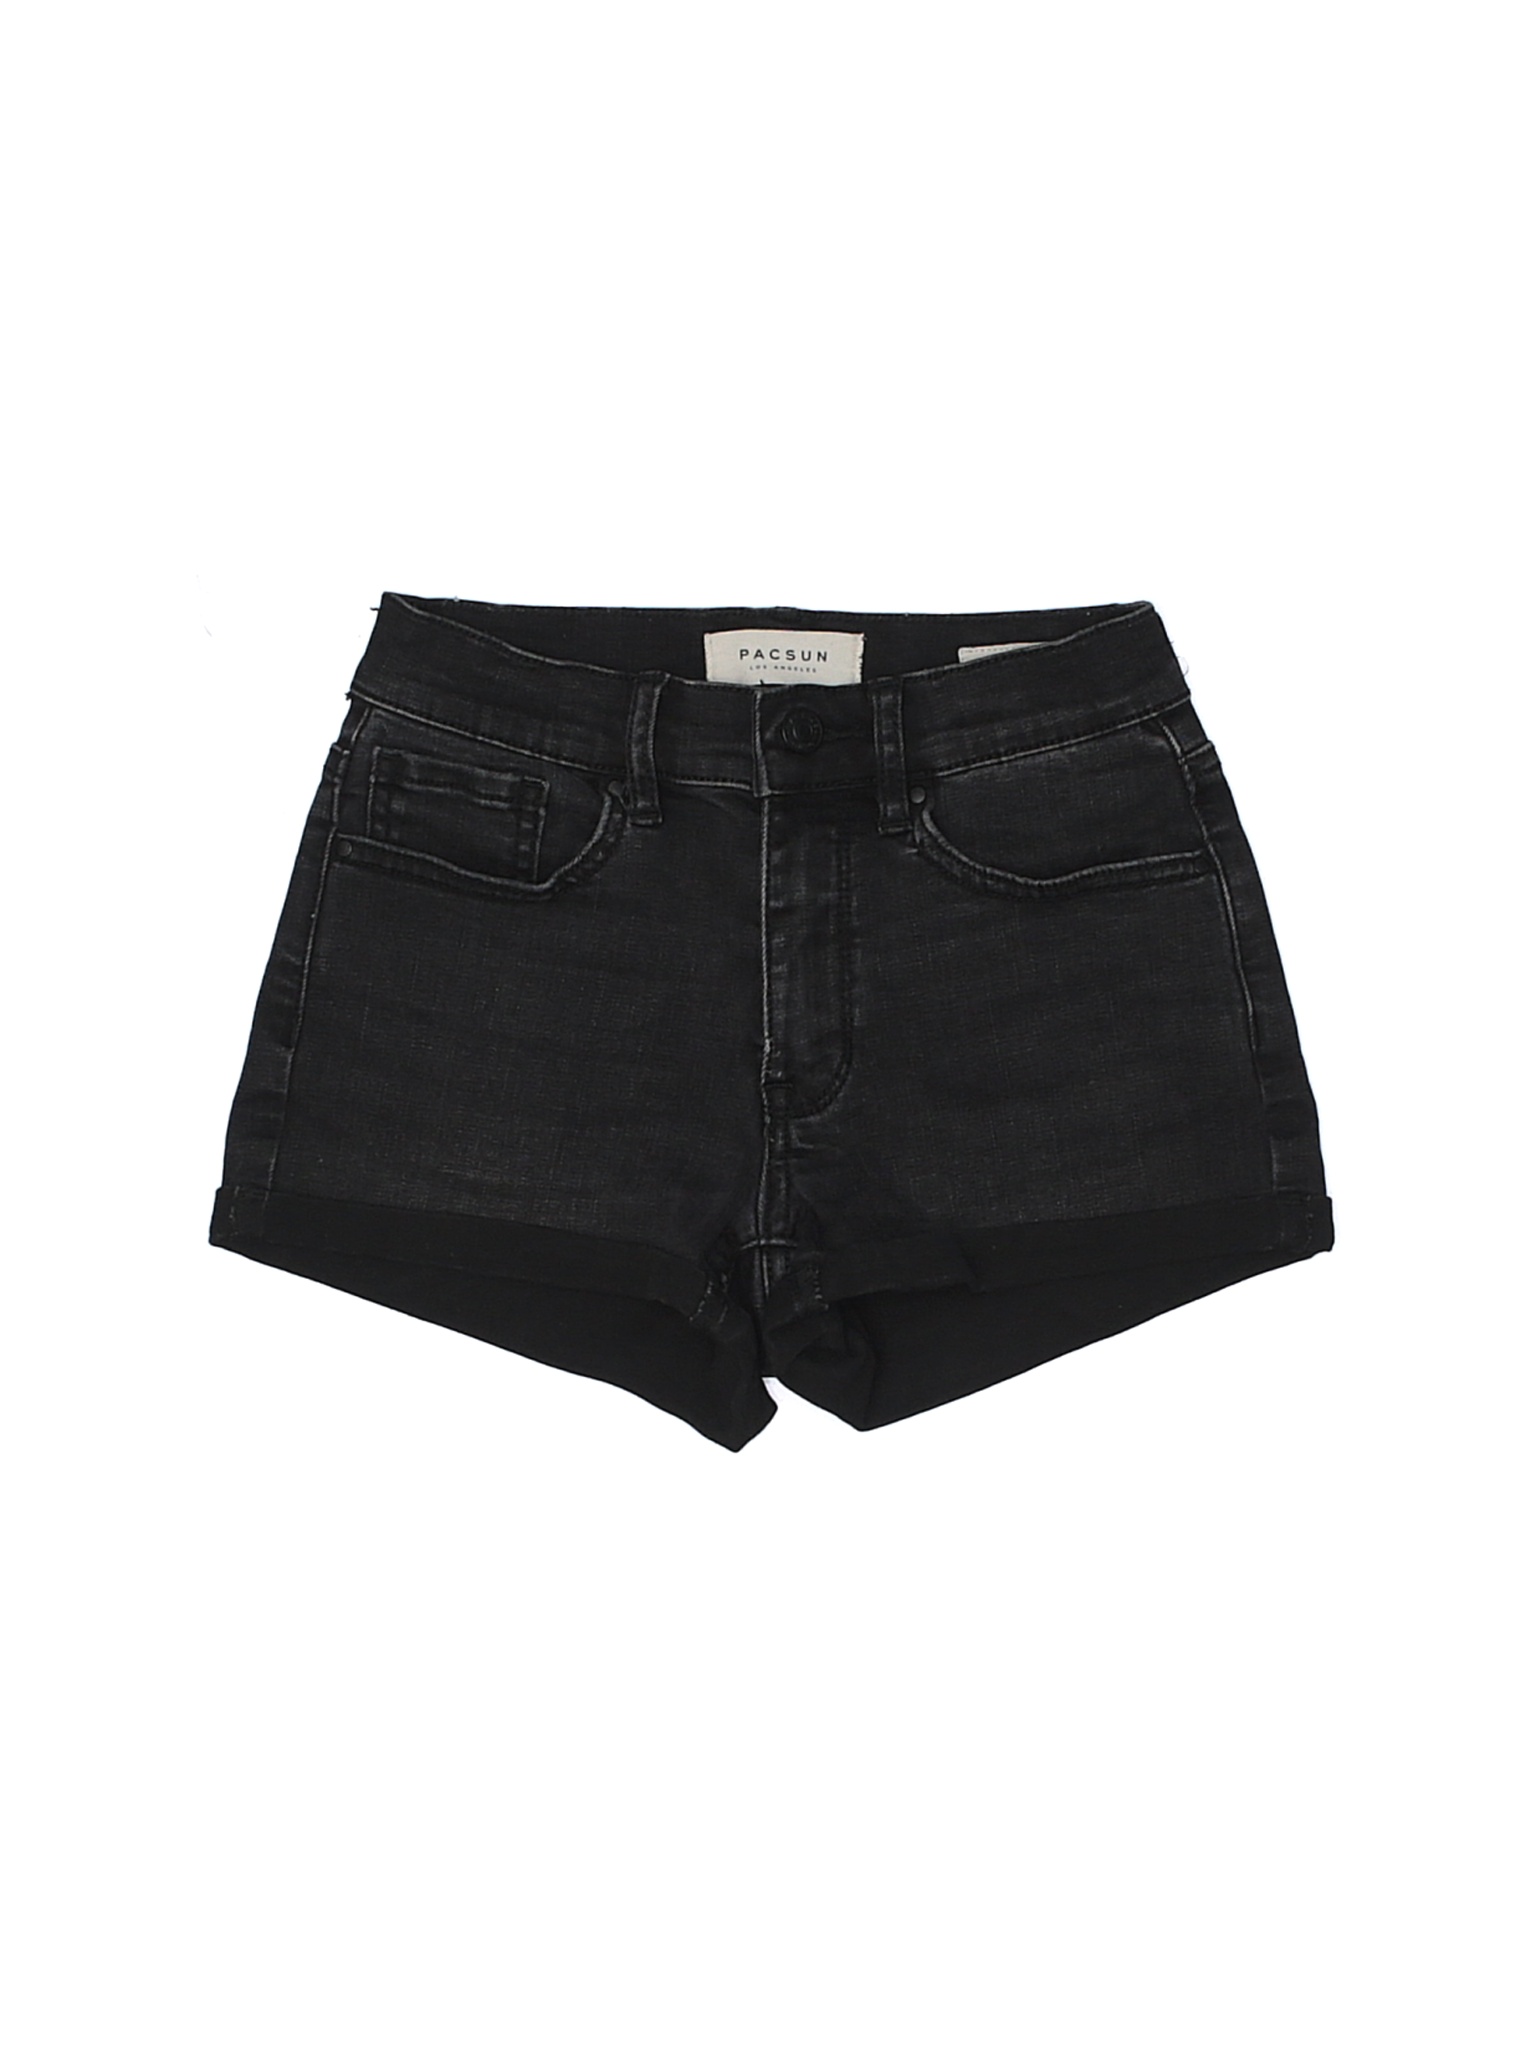 PacSun Women Black Denim Shorts 23W | eBay